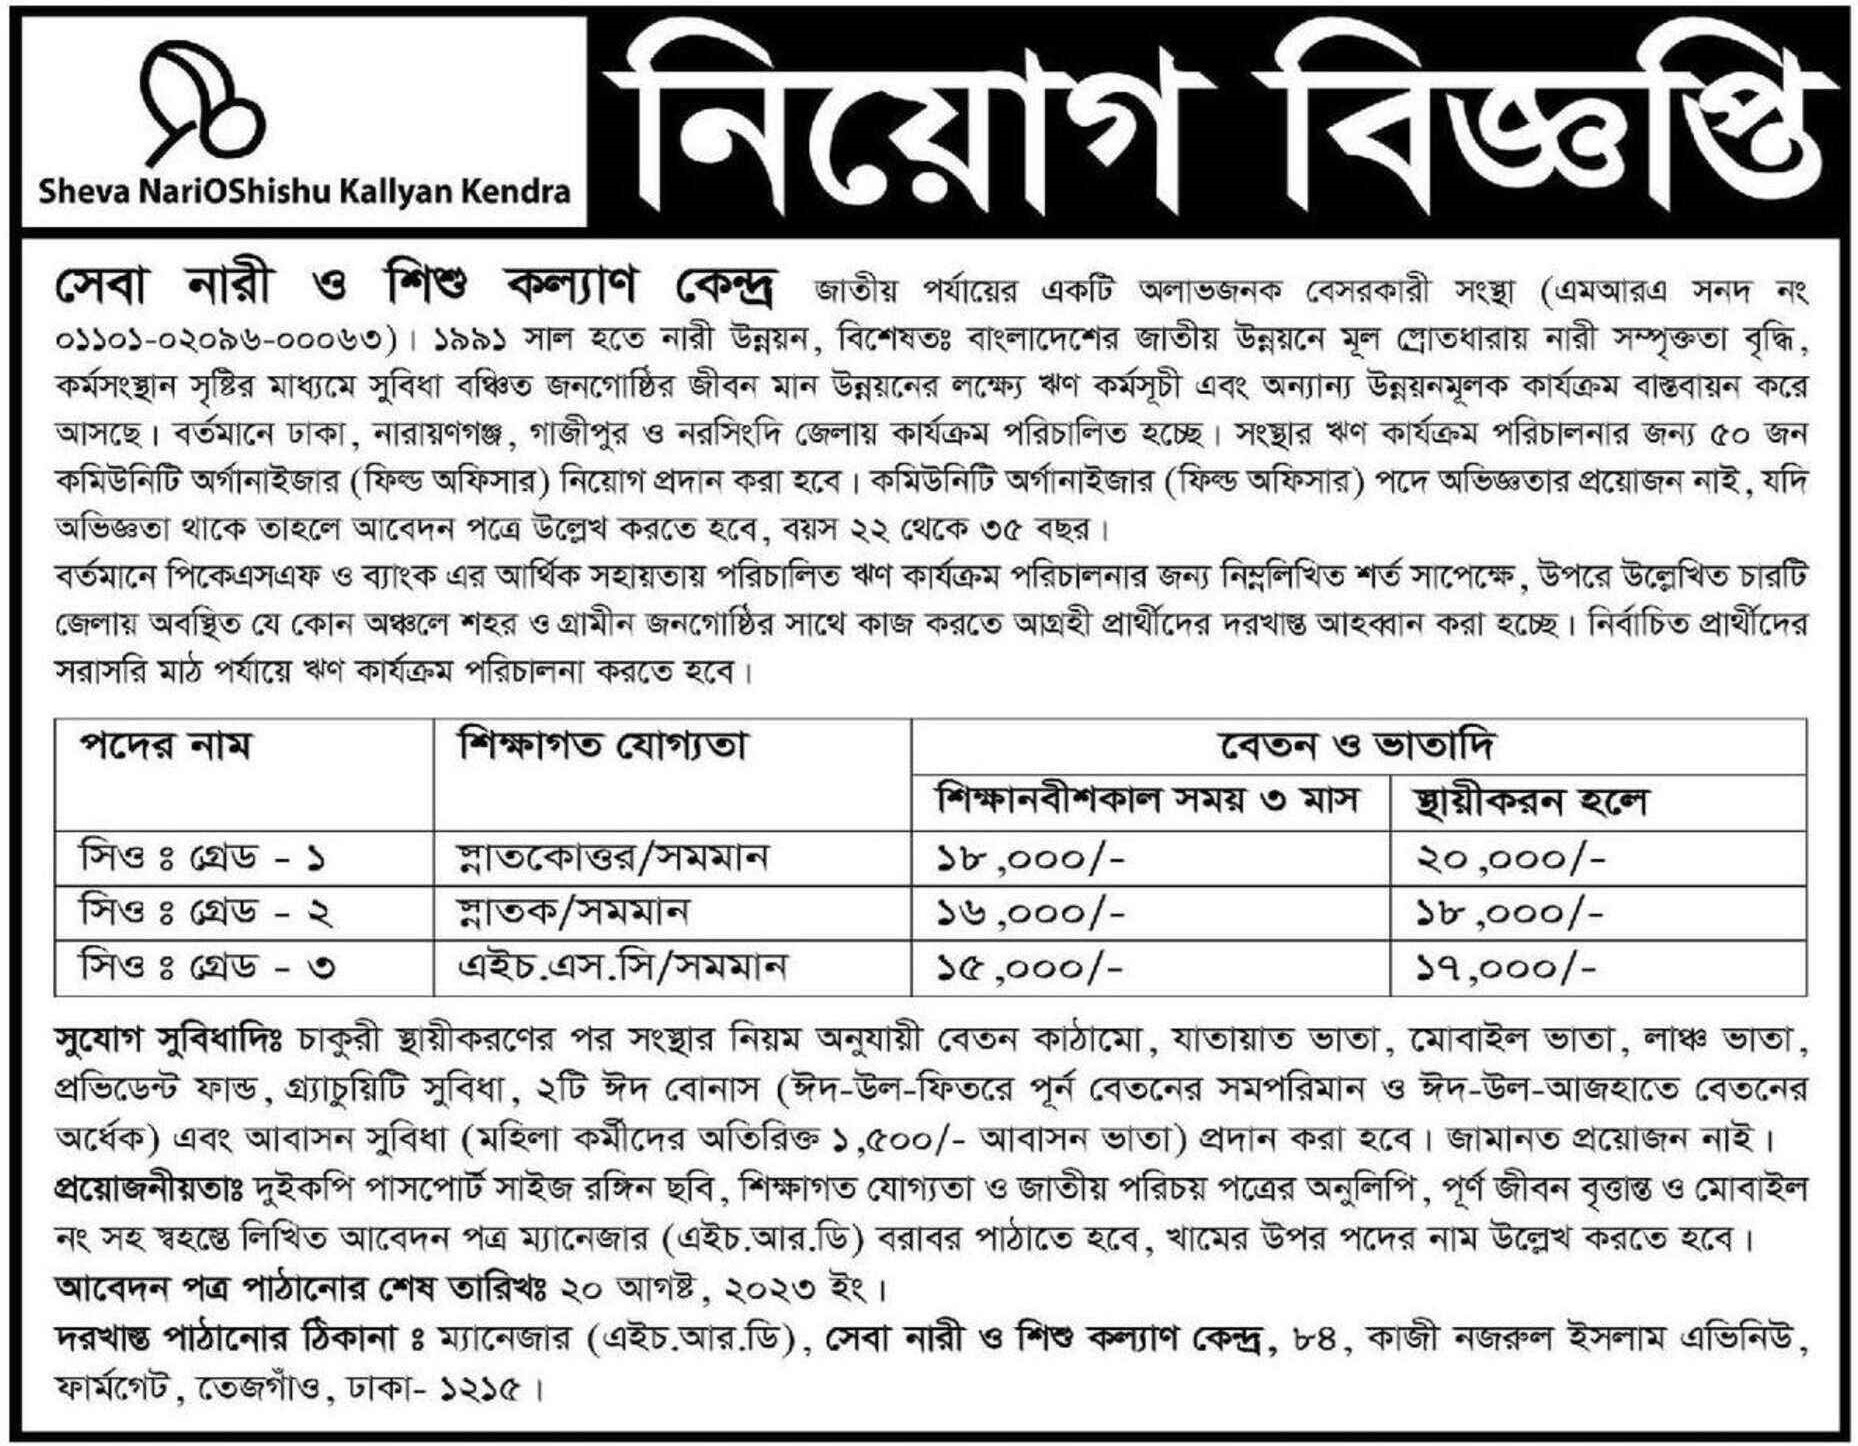 NGO job in Bangladesh in Sheva NariOshishu Kallyan Kendra